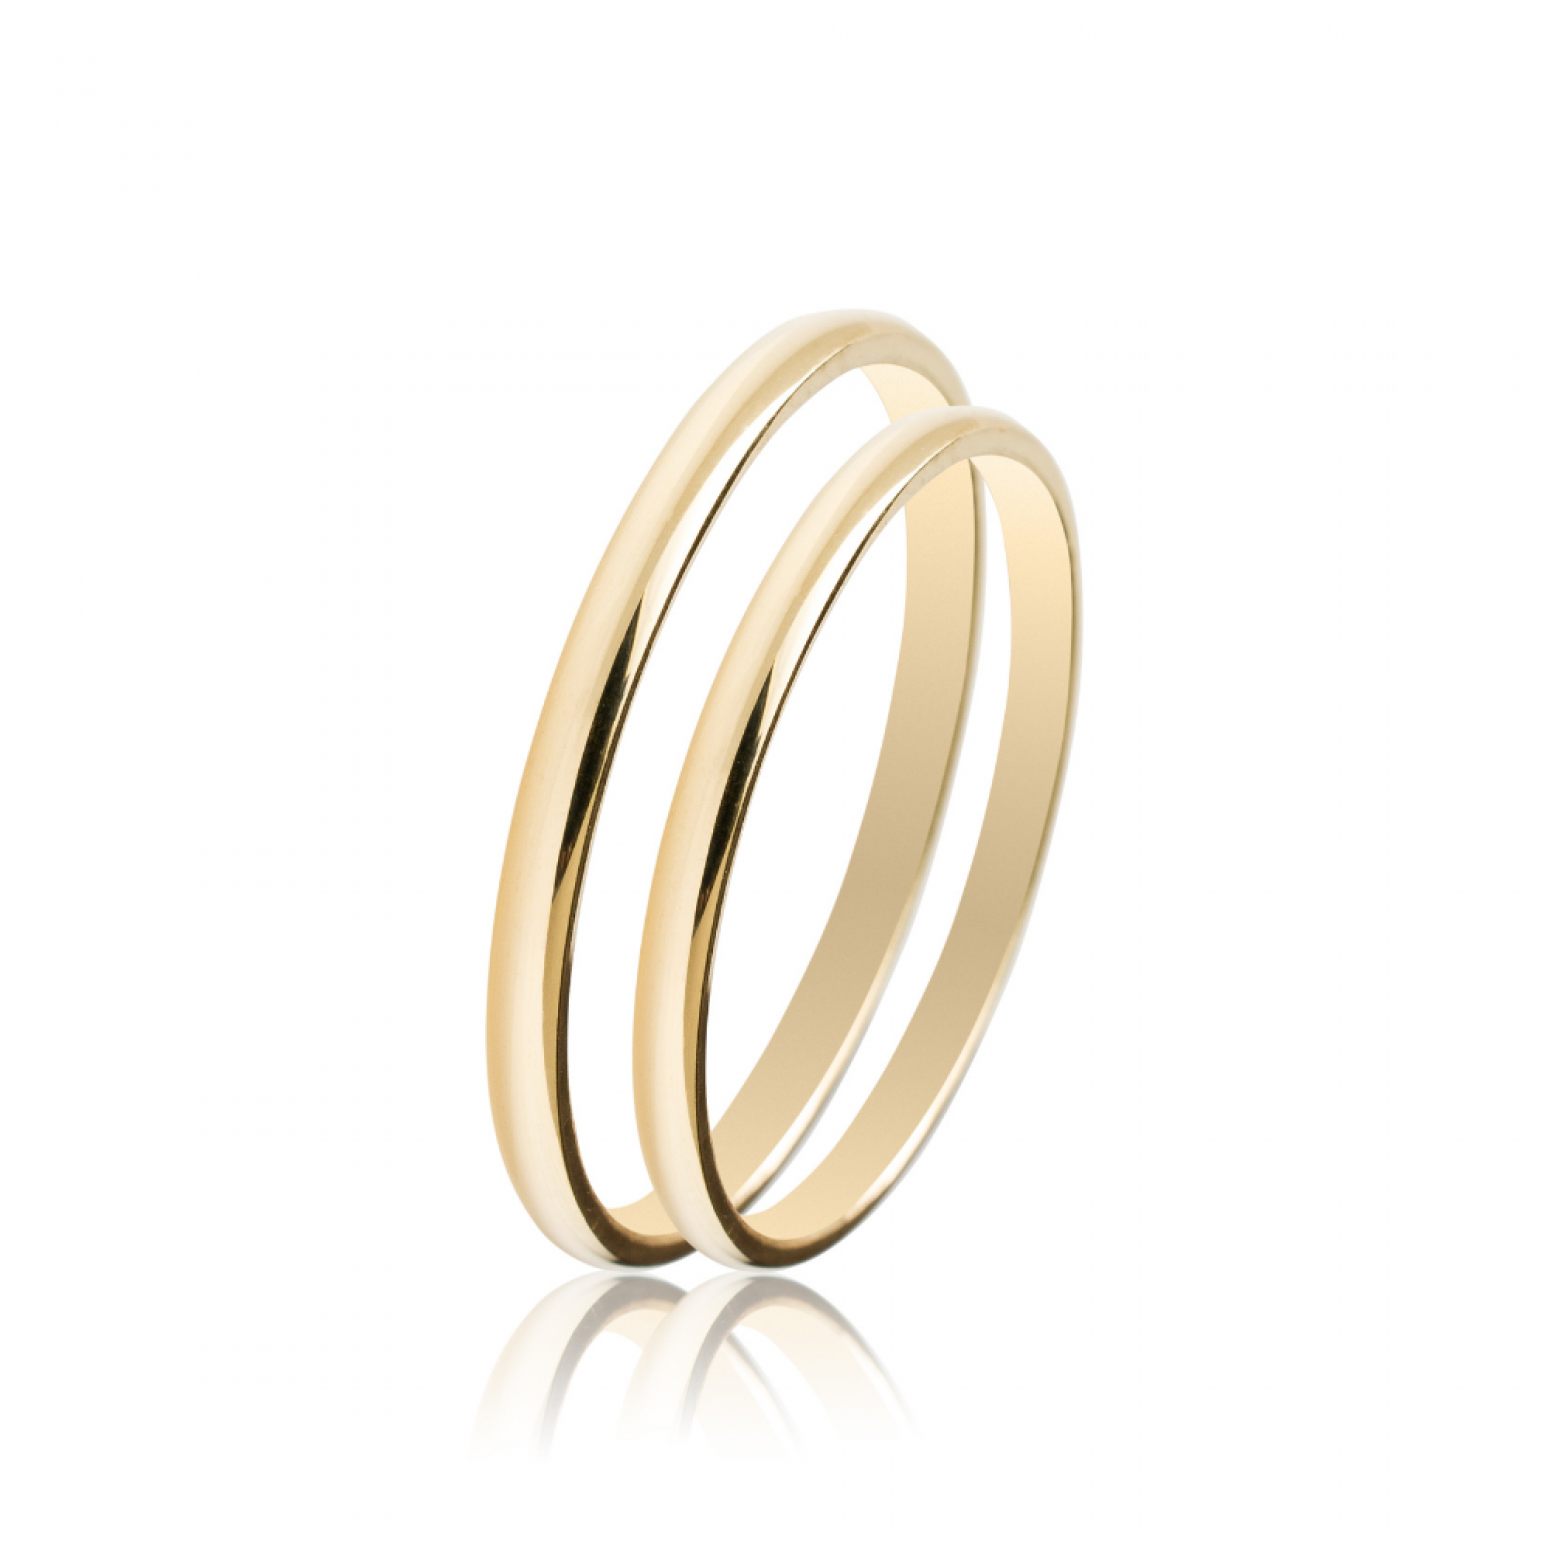 Maschio Femmina wedding rings in yellow gold, K9, pair da4021 WEDDING RINGS Κοσμηματα - chrilia.gr